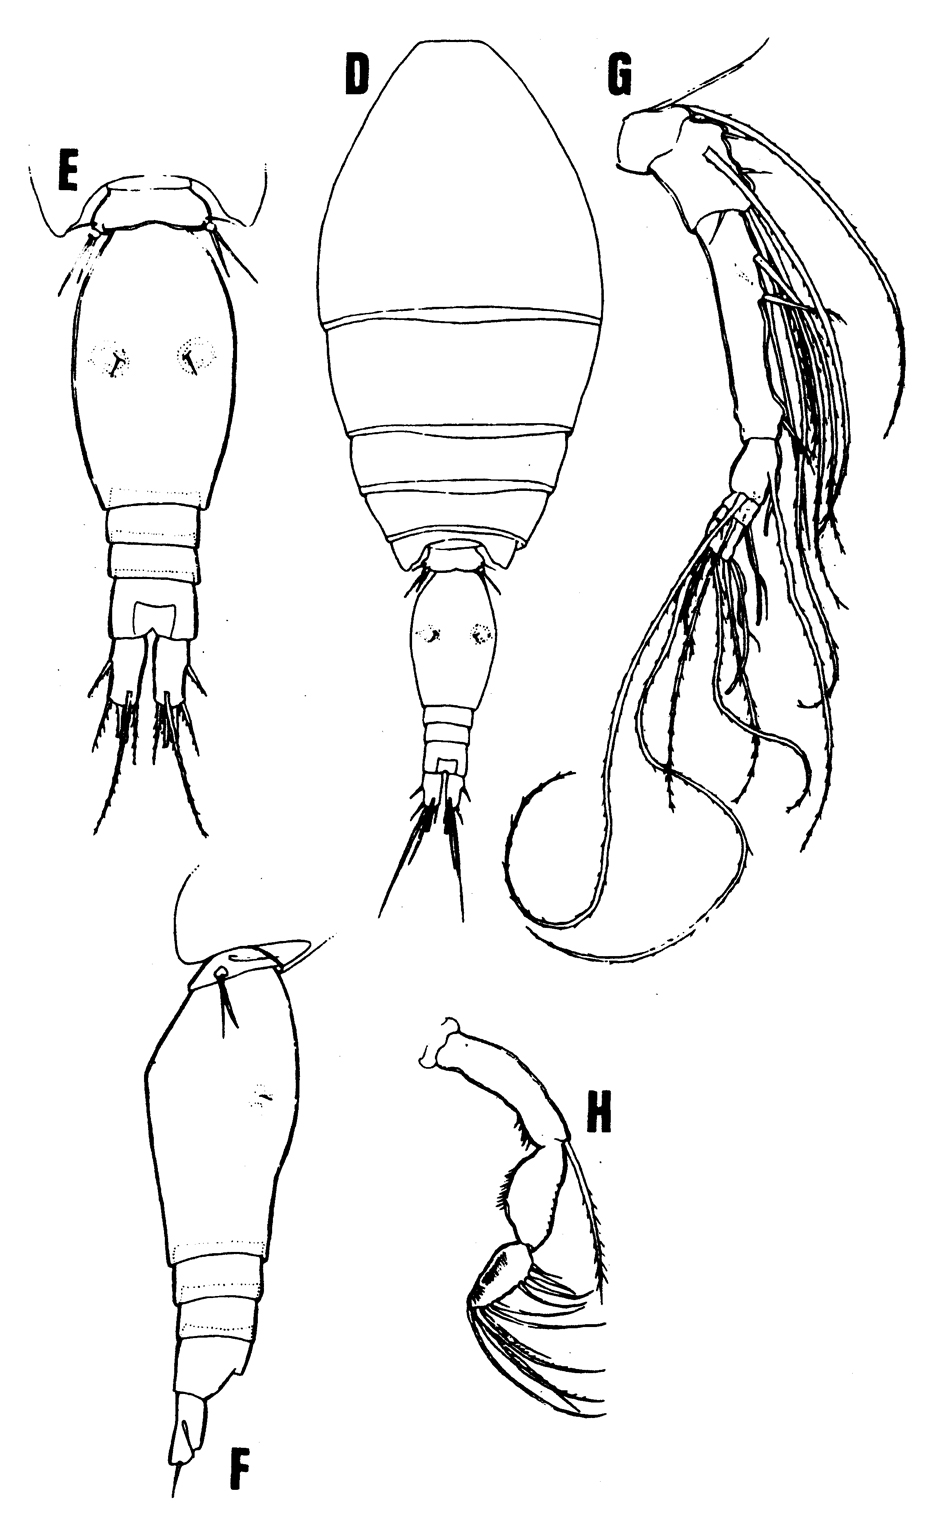 Species Oncaea rimula - Plate 1 of morphological figures